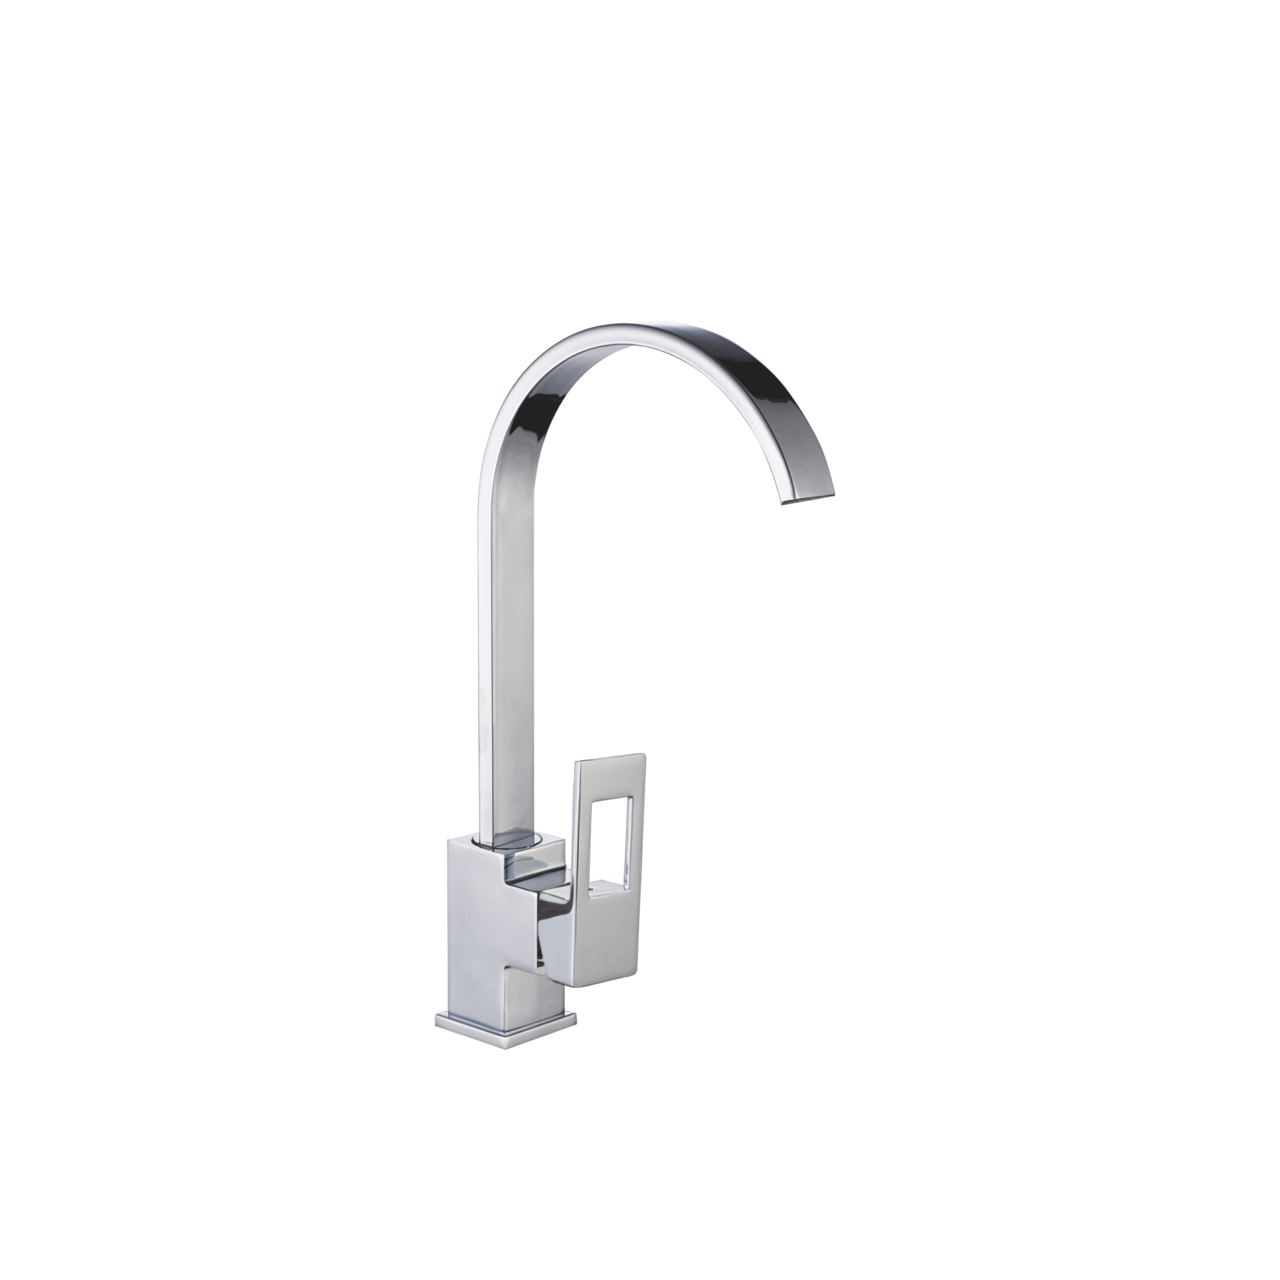 OJ-J2596H High Arc Kitchen Faucet Modern Single Hole 360 Degree Swivel Spout Kitchen Sink Faucet Stainless Steel Kitchen Faucet 